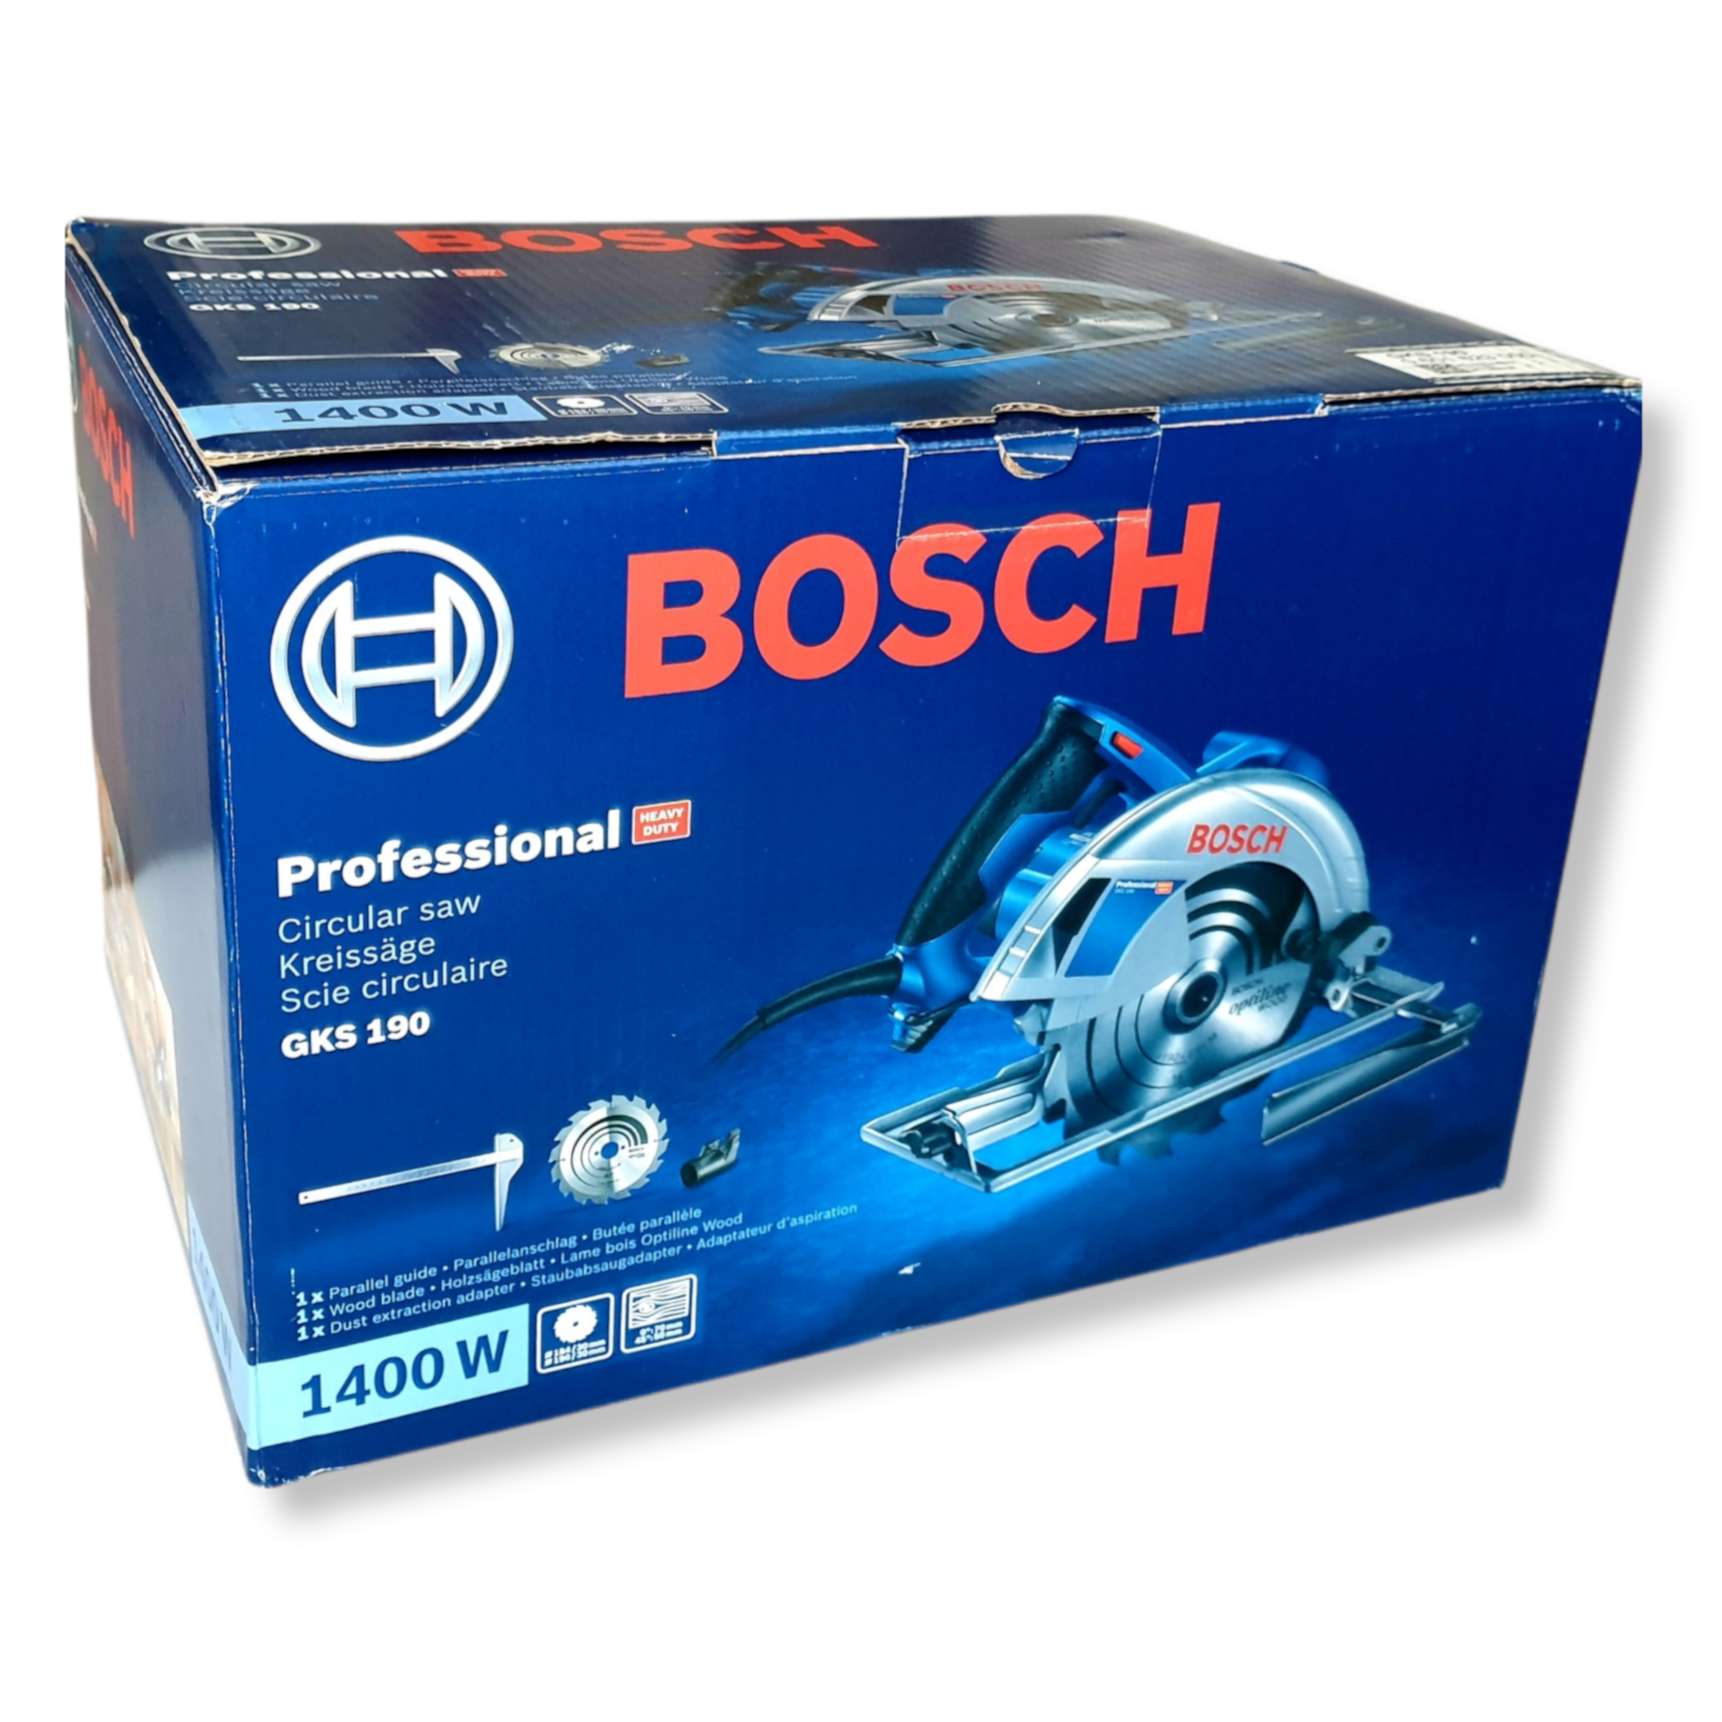 Professional iTEMZ4U Handkreissäge Bosch Watt GKS 190 – 1400 -